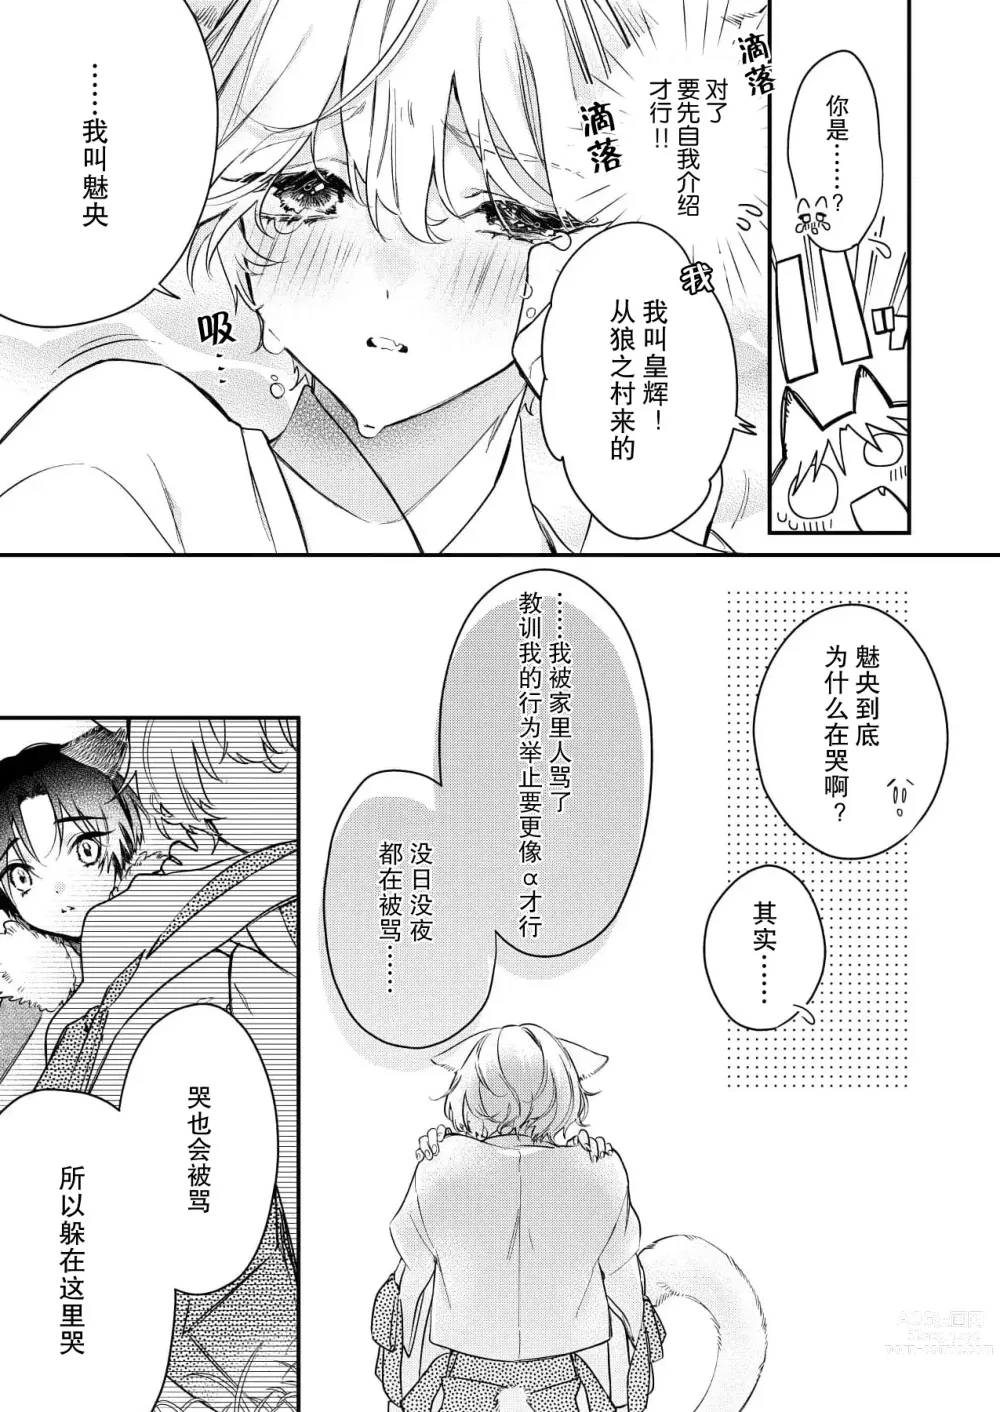 Page 4 of manga 无可奈何花落去 只叹道，命运使然 1-7 end